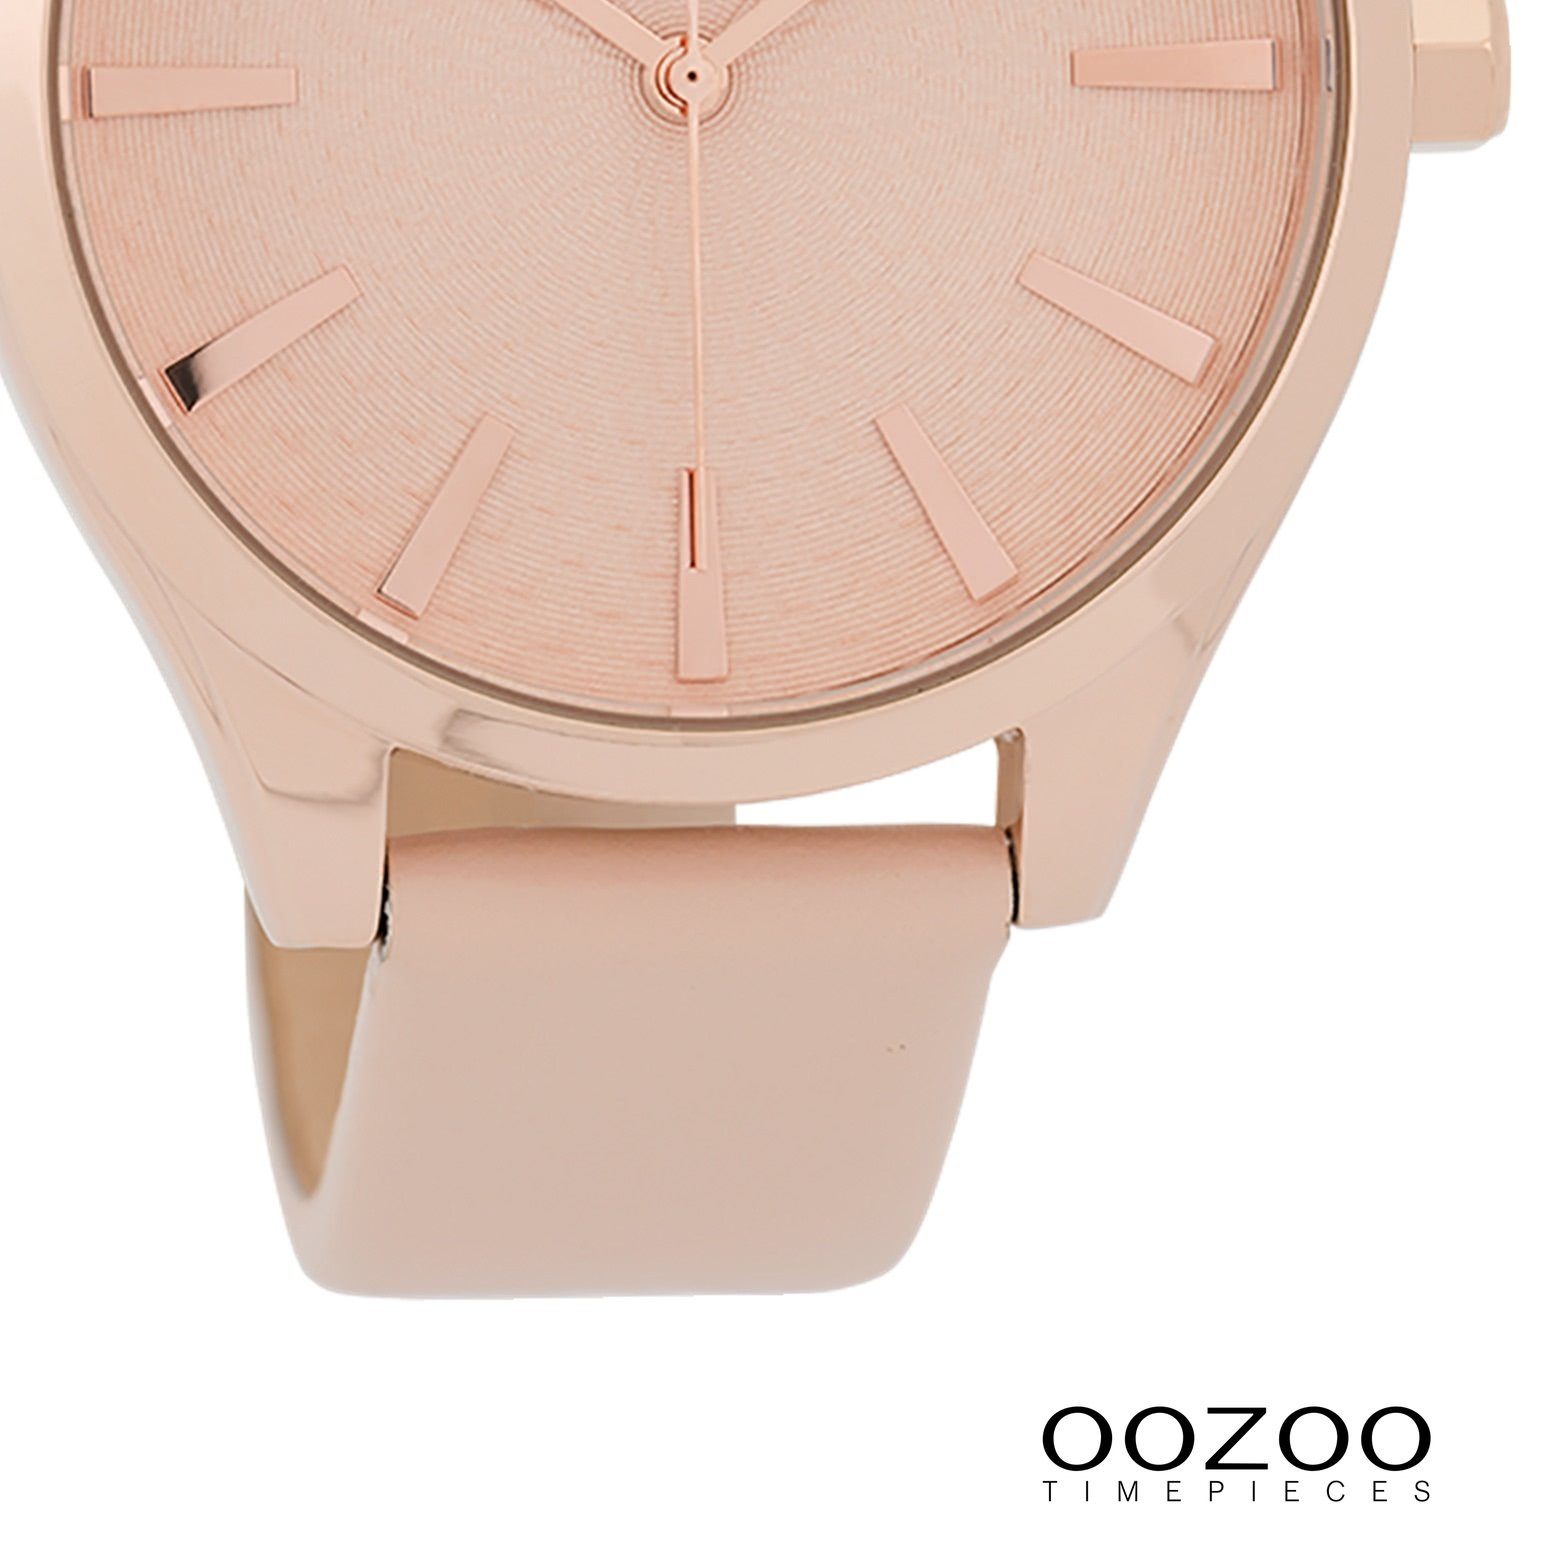 OOZOO Lederarmband Damenuhr rosa, 42mm), Fashion Timepieces, Damen groß Oozoo Armbanduhr Quarzuhr rund, (ca.